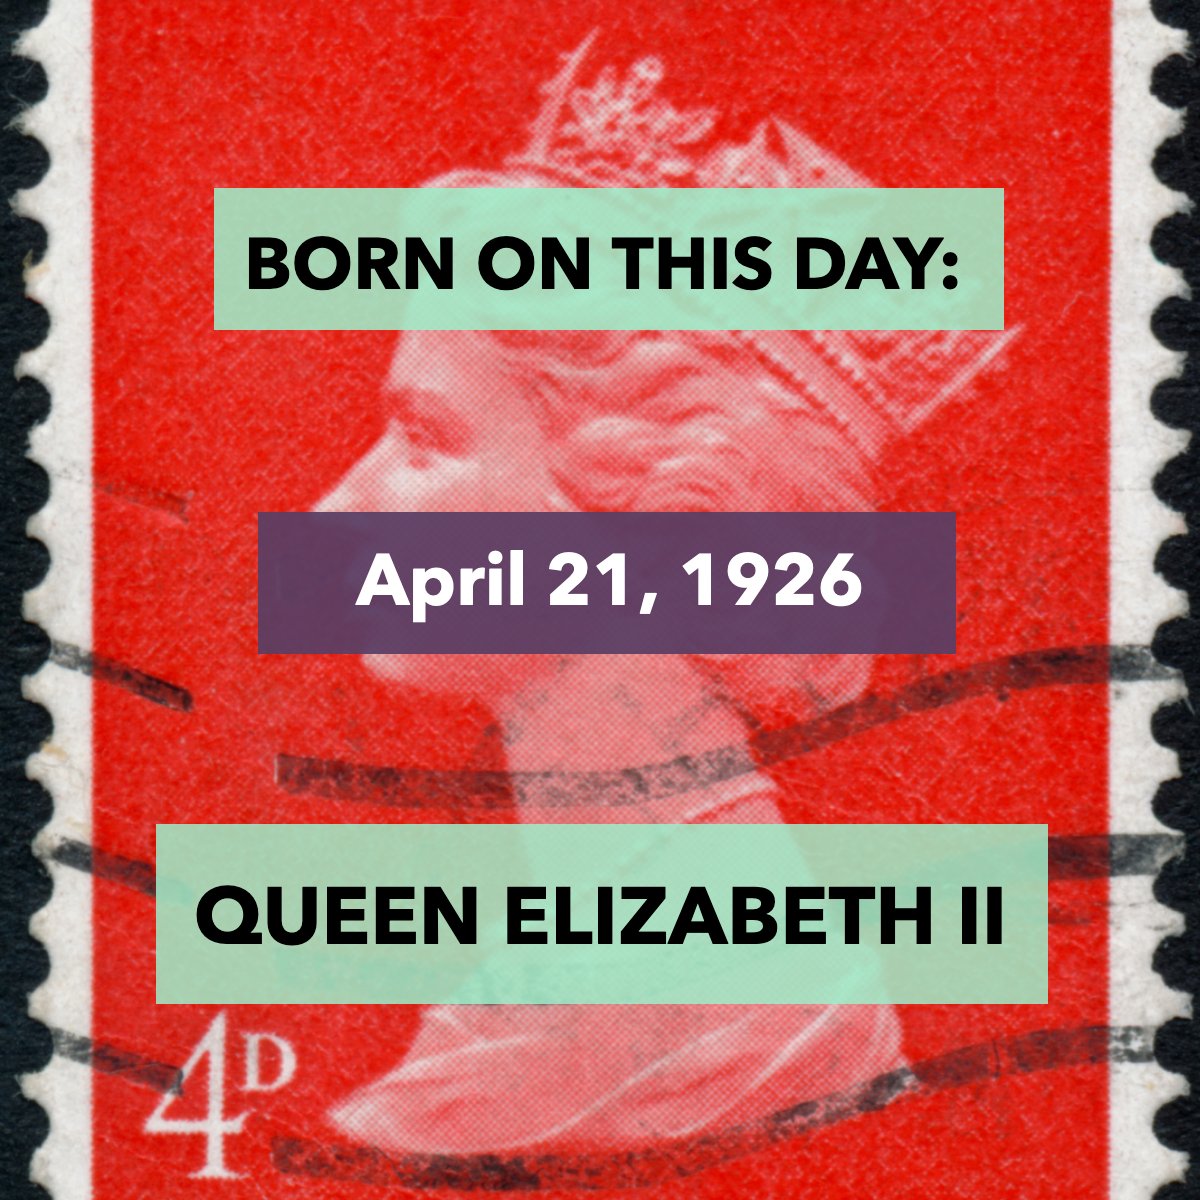 Today marks the birthday of Queen Elizabeth II She was Britain's longest-reigning monarch #queen👑 #borntoday #bornonthisday #famousbirthdays #barbarabarker #barrettrealestate #barbarabarkerteam #realestate #scottsdale #chandler #queencreek #gilbert #homes